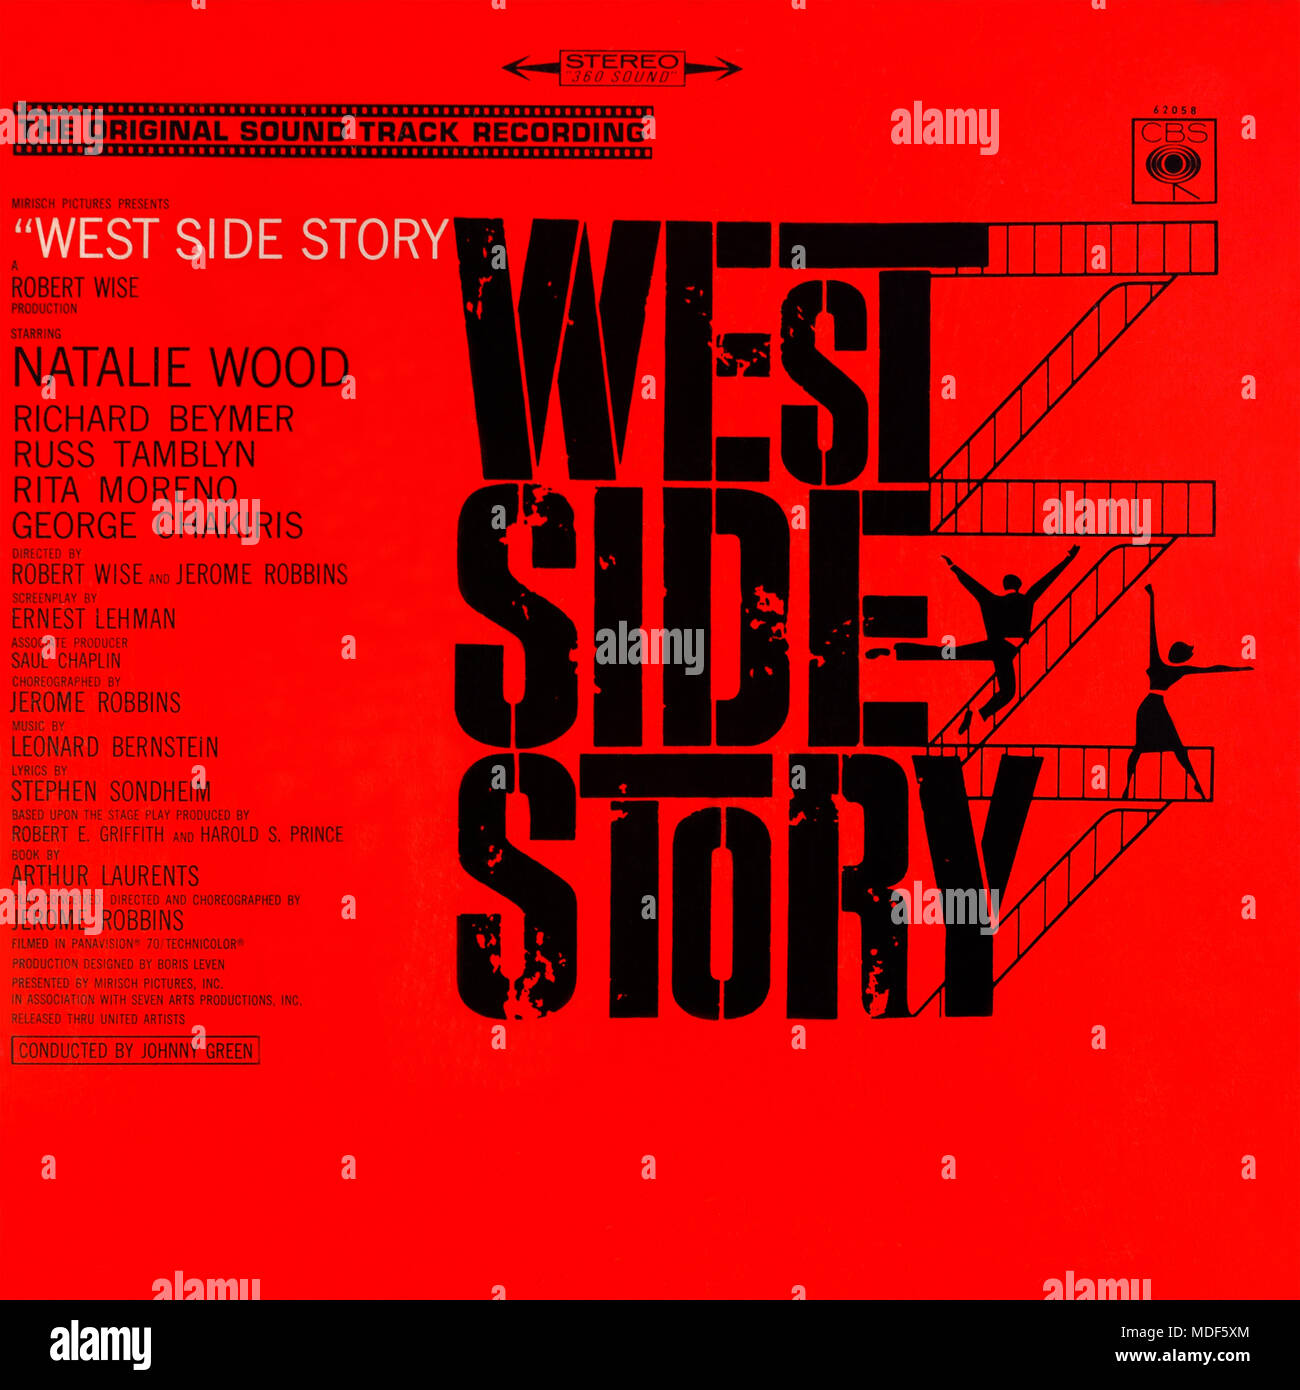 Altre immagini  Leonard Bernstein - original vinyl album cover - West Side Story (Original Sound Track Recording) - 1961 Stock Photo